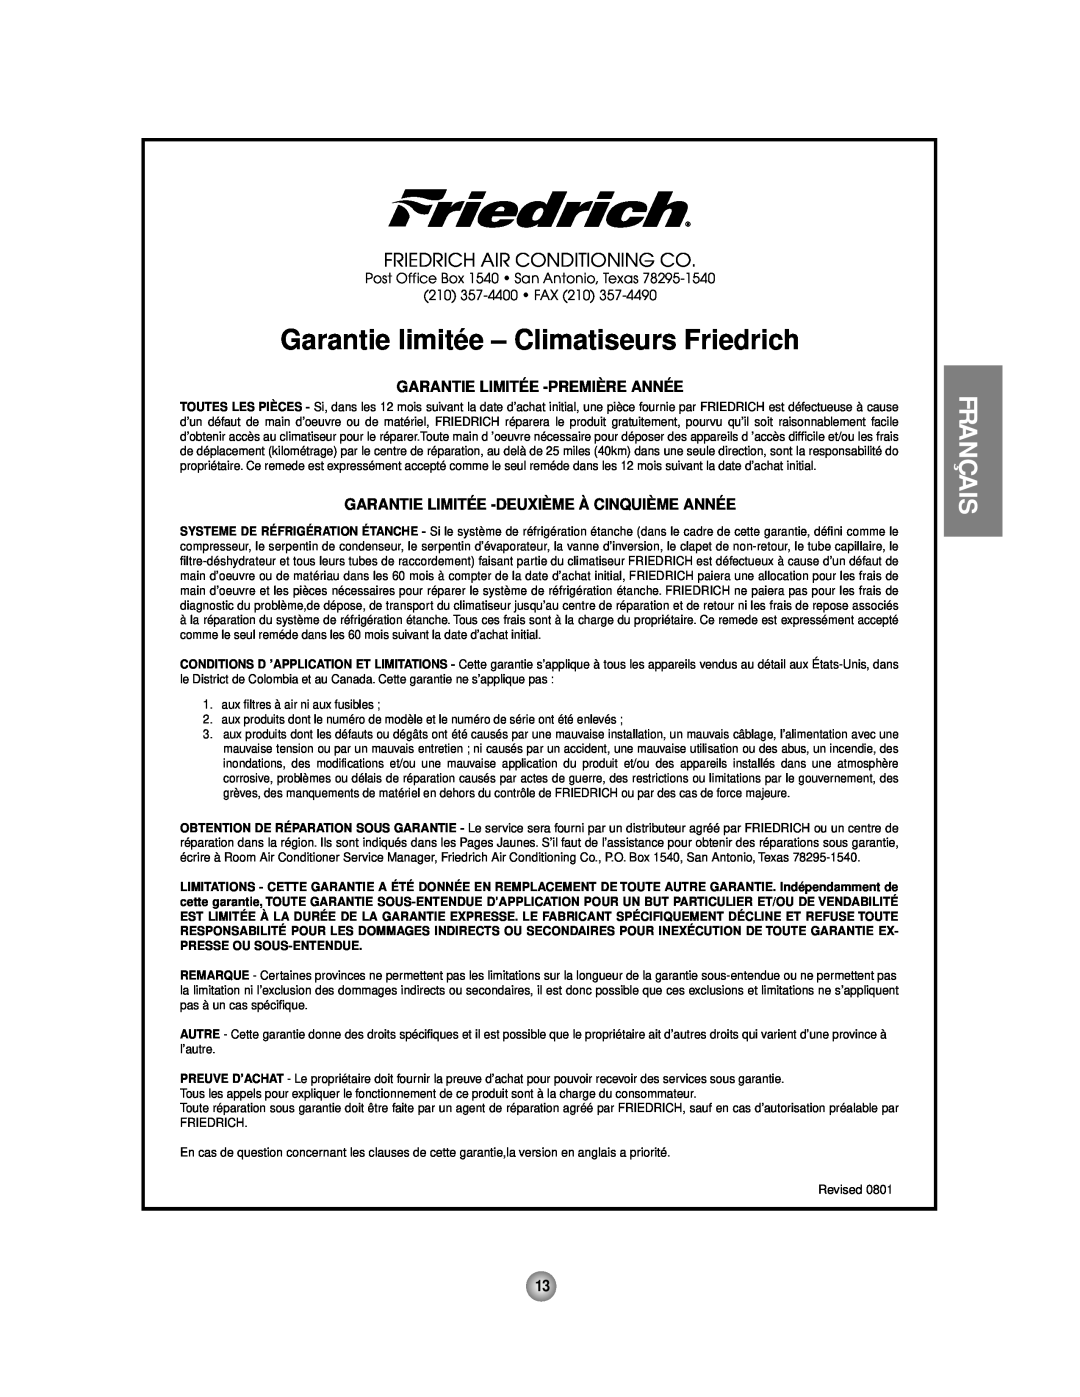 Friedrich CP06 manual Garantie limitée - Climatiseurs Friedrich, Français, Friedrich Air Conditioning Co, 210 357-4400 FAX 